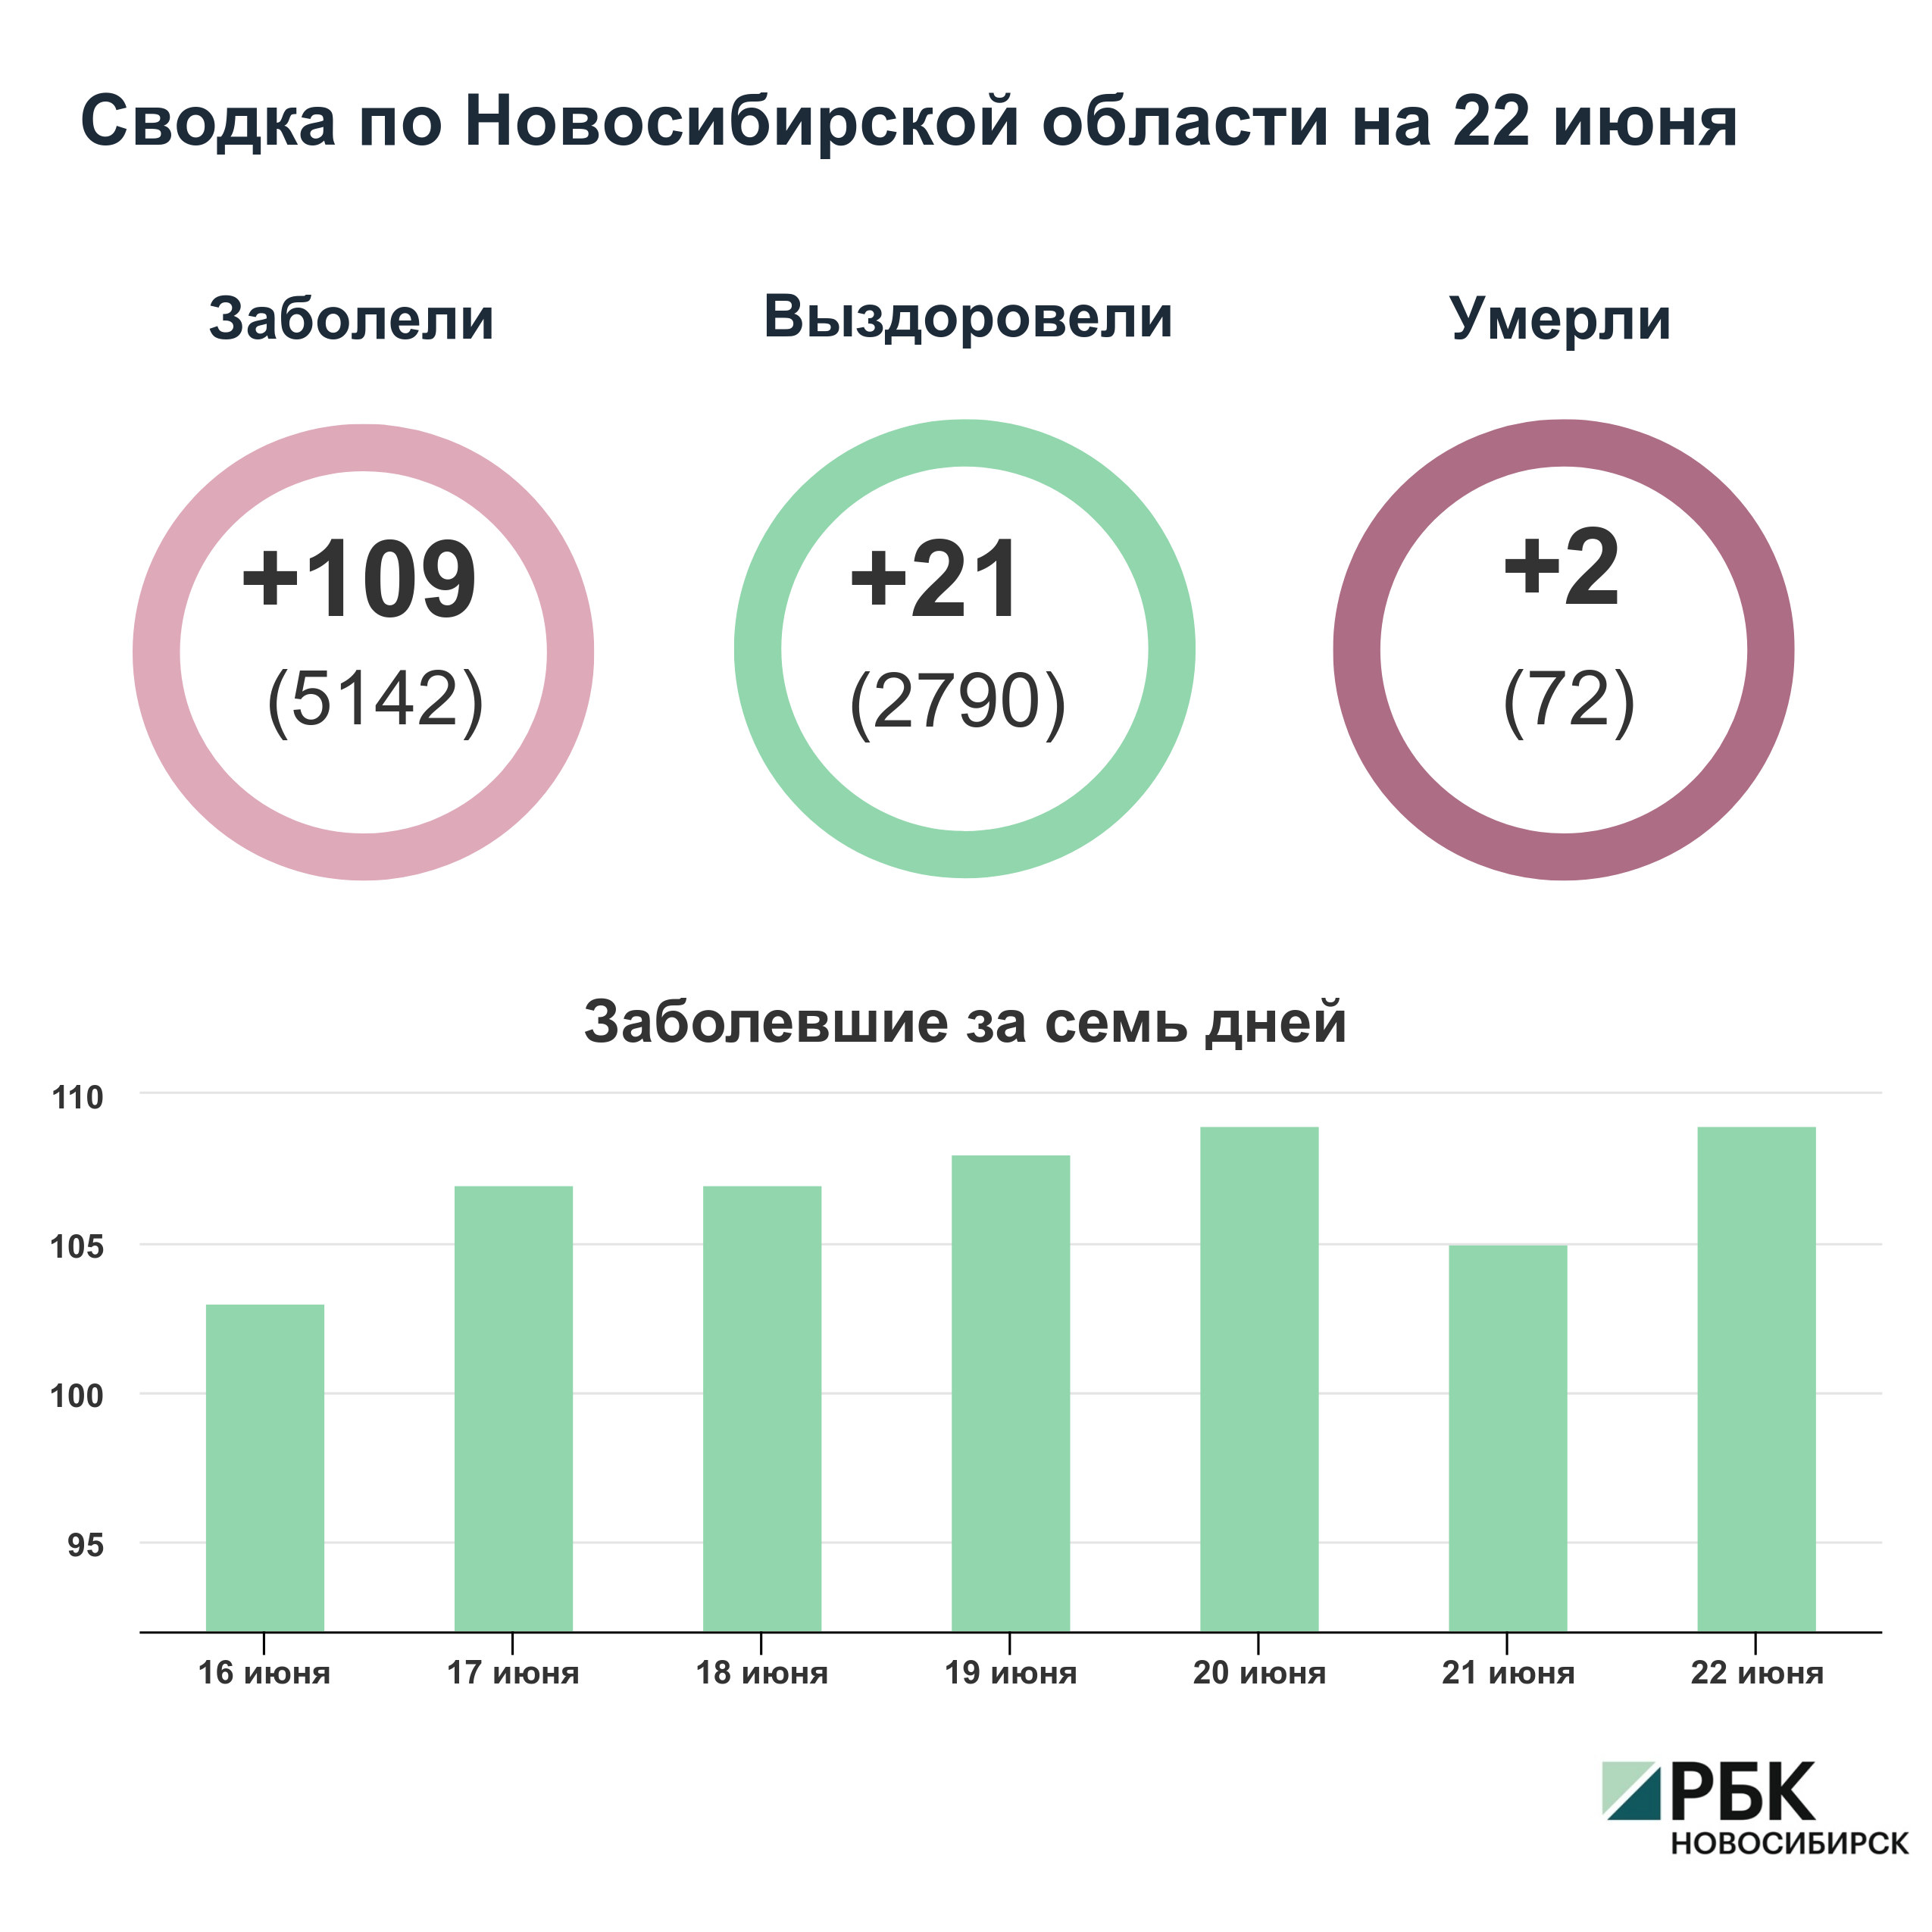 Коронавирус в Новосибирске: сводка на 22 июня